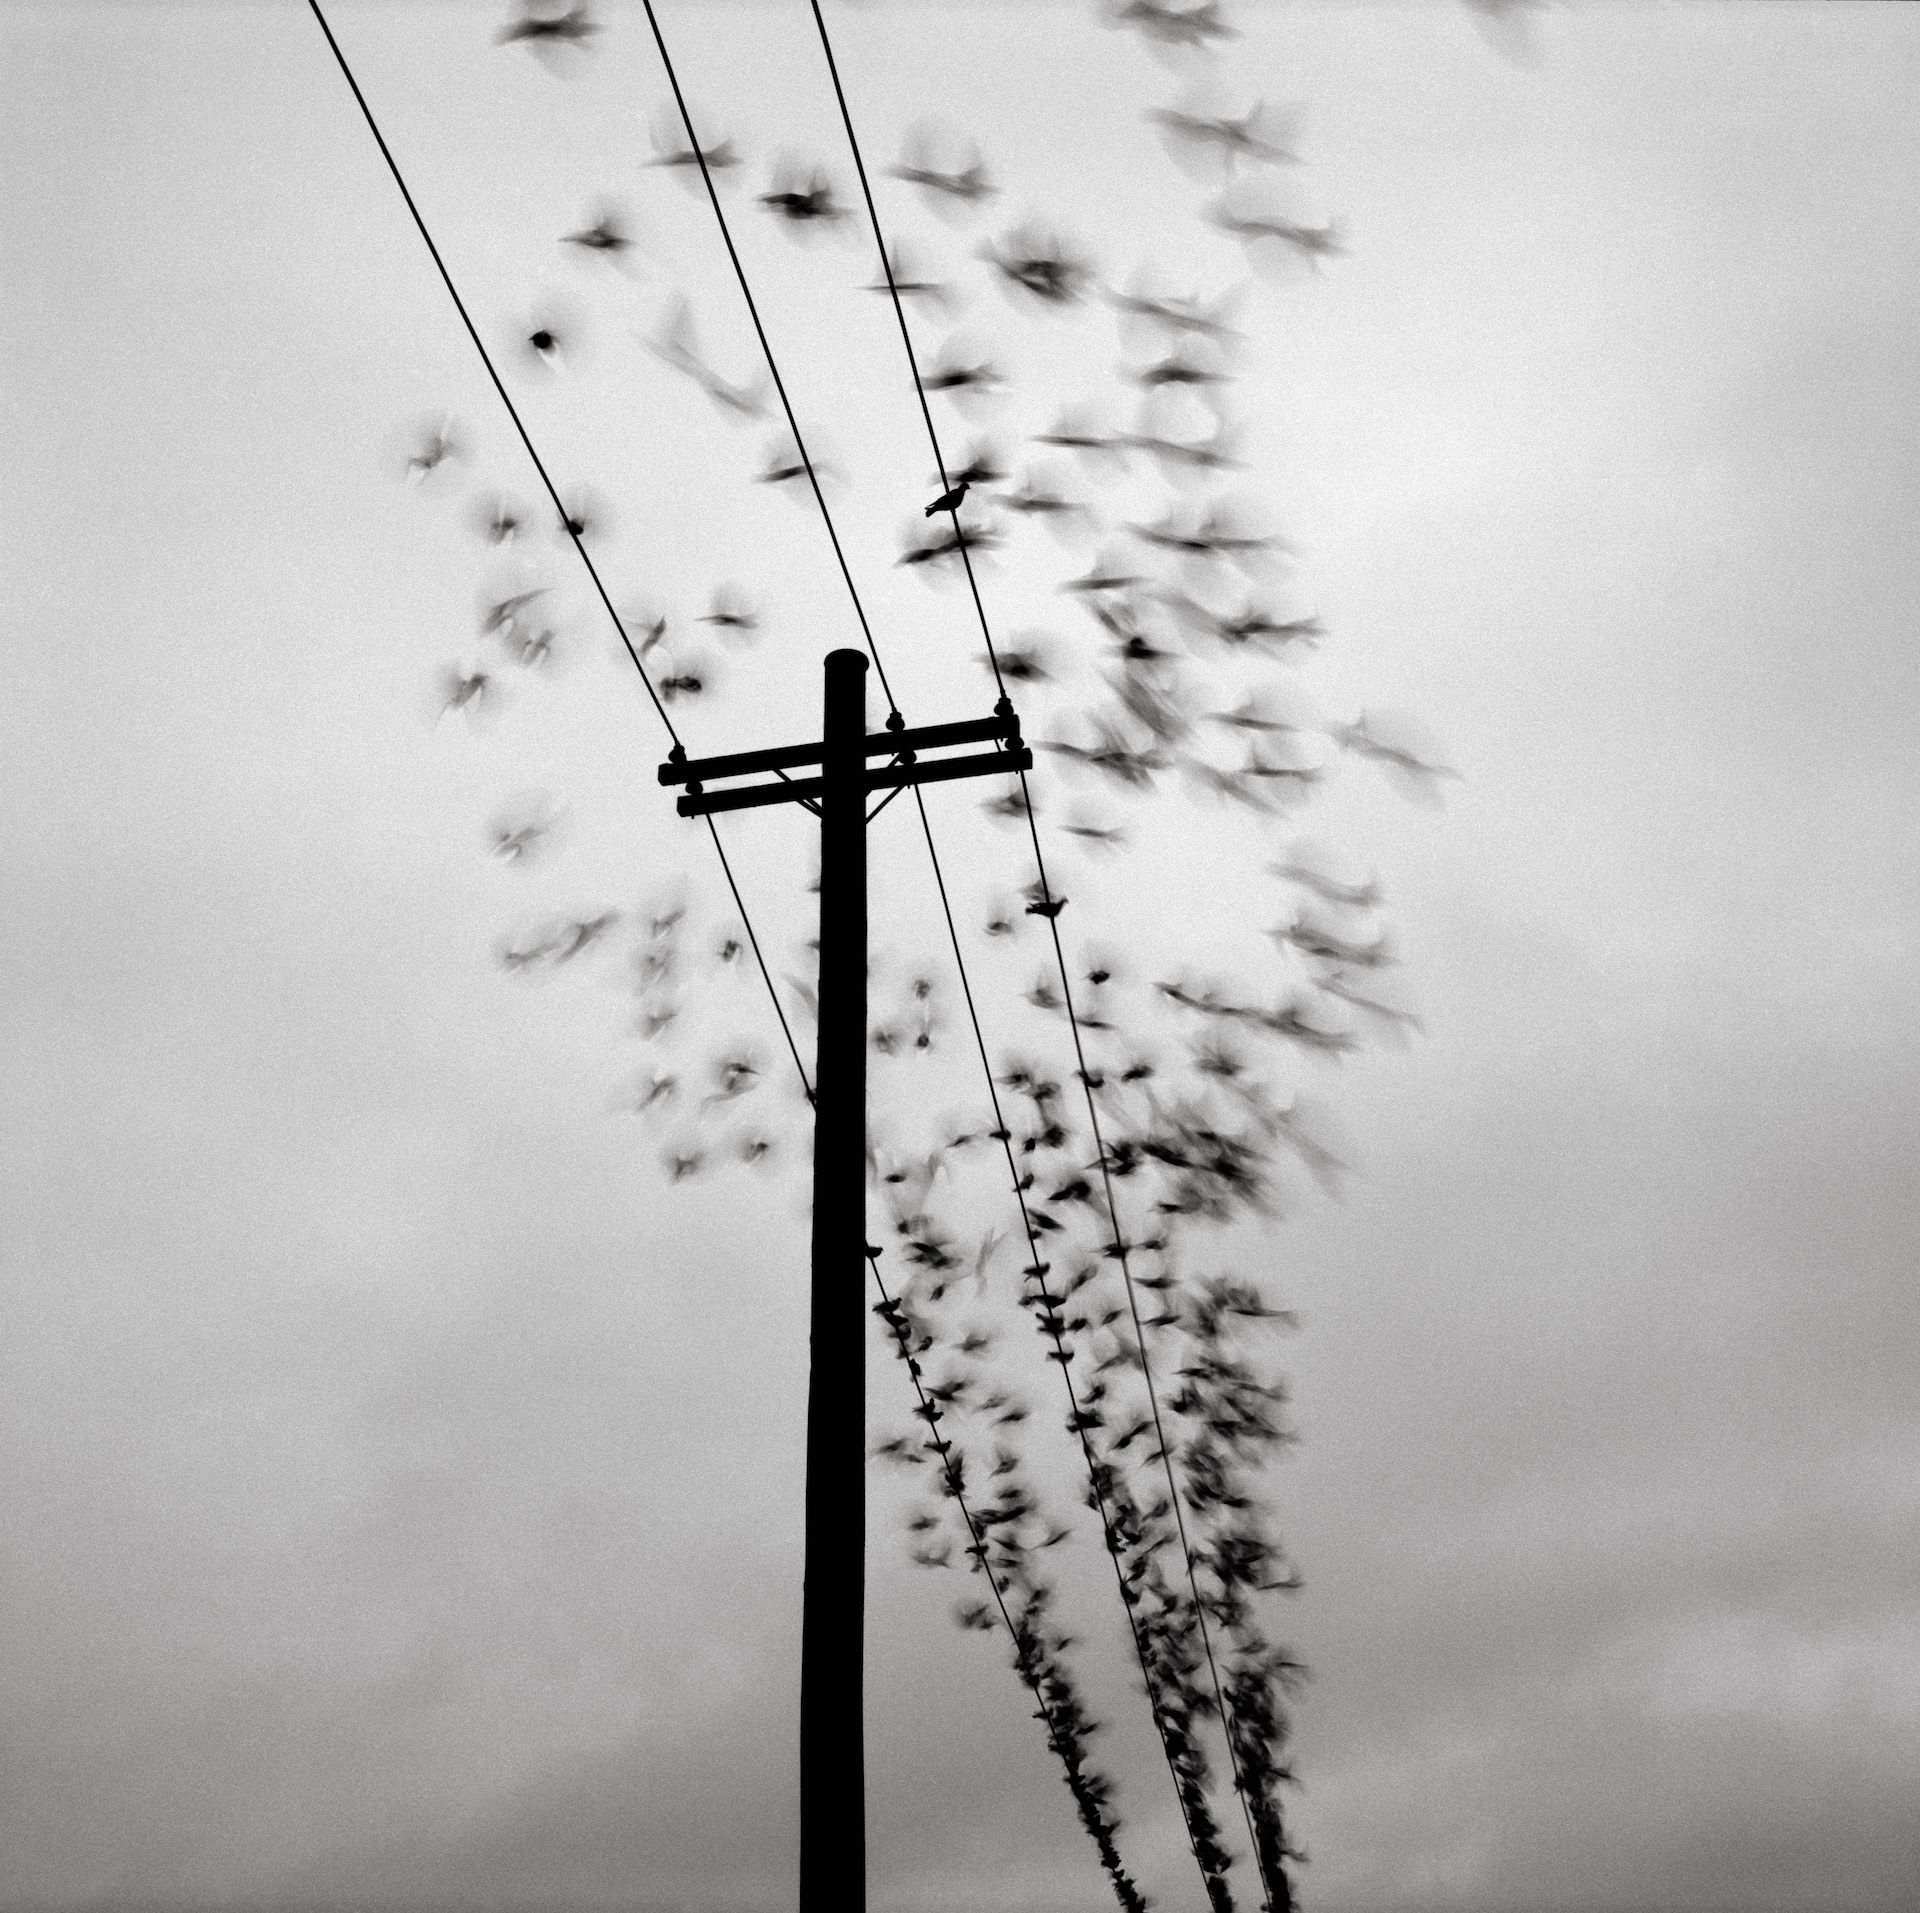 Telephone Pole with Birds - Austin Granger